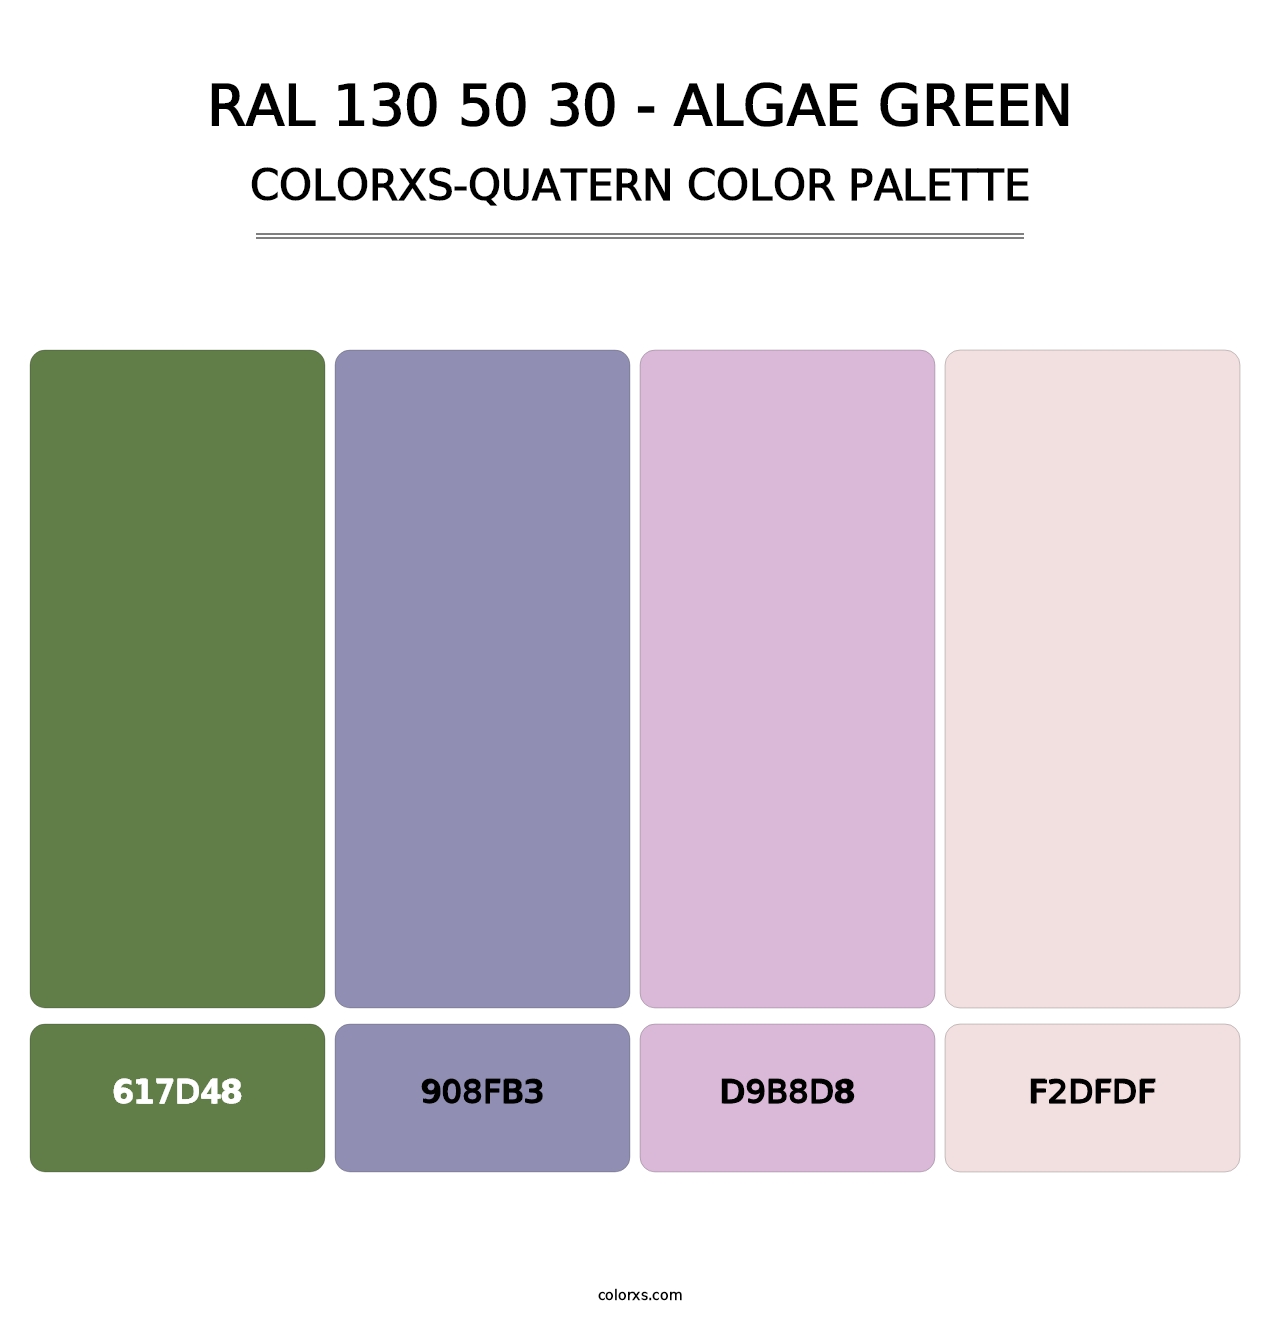 RAL 130 50 30 - Algae Green - Colorxs Quatern Palette